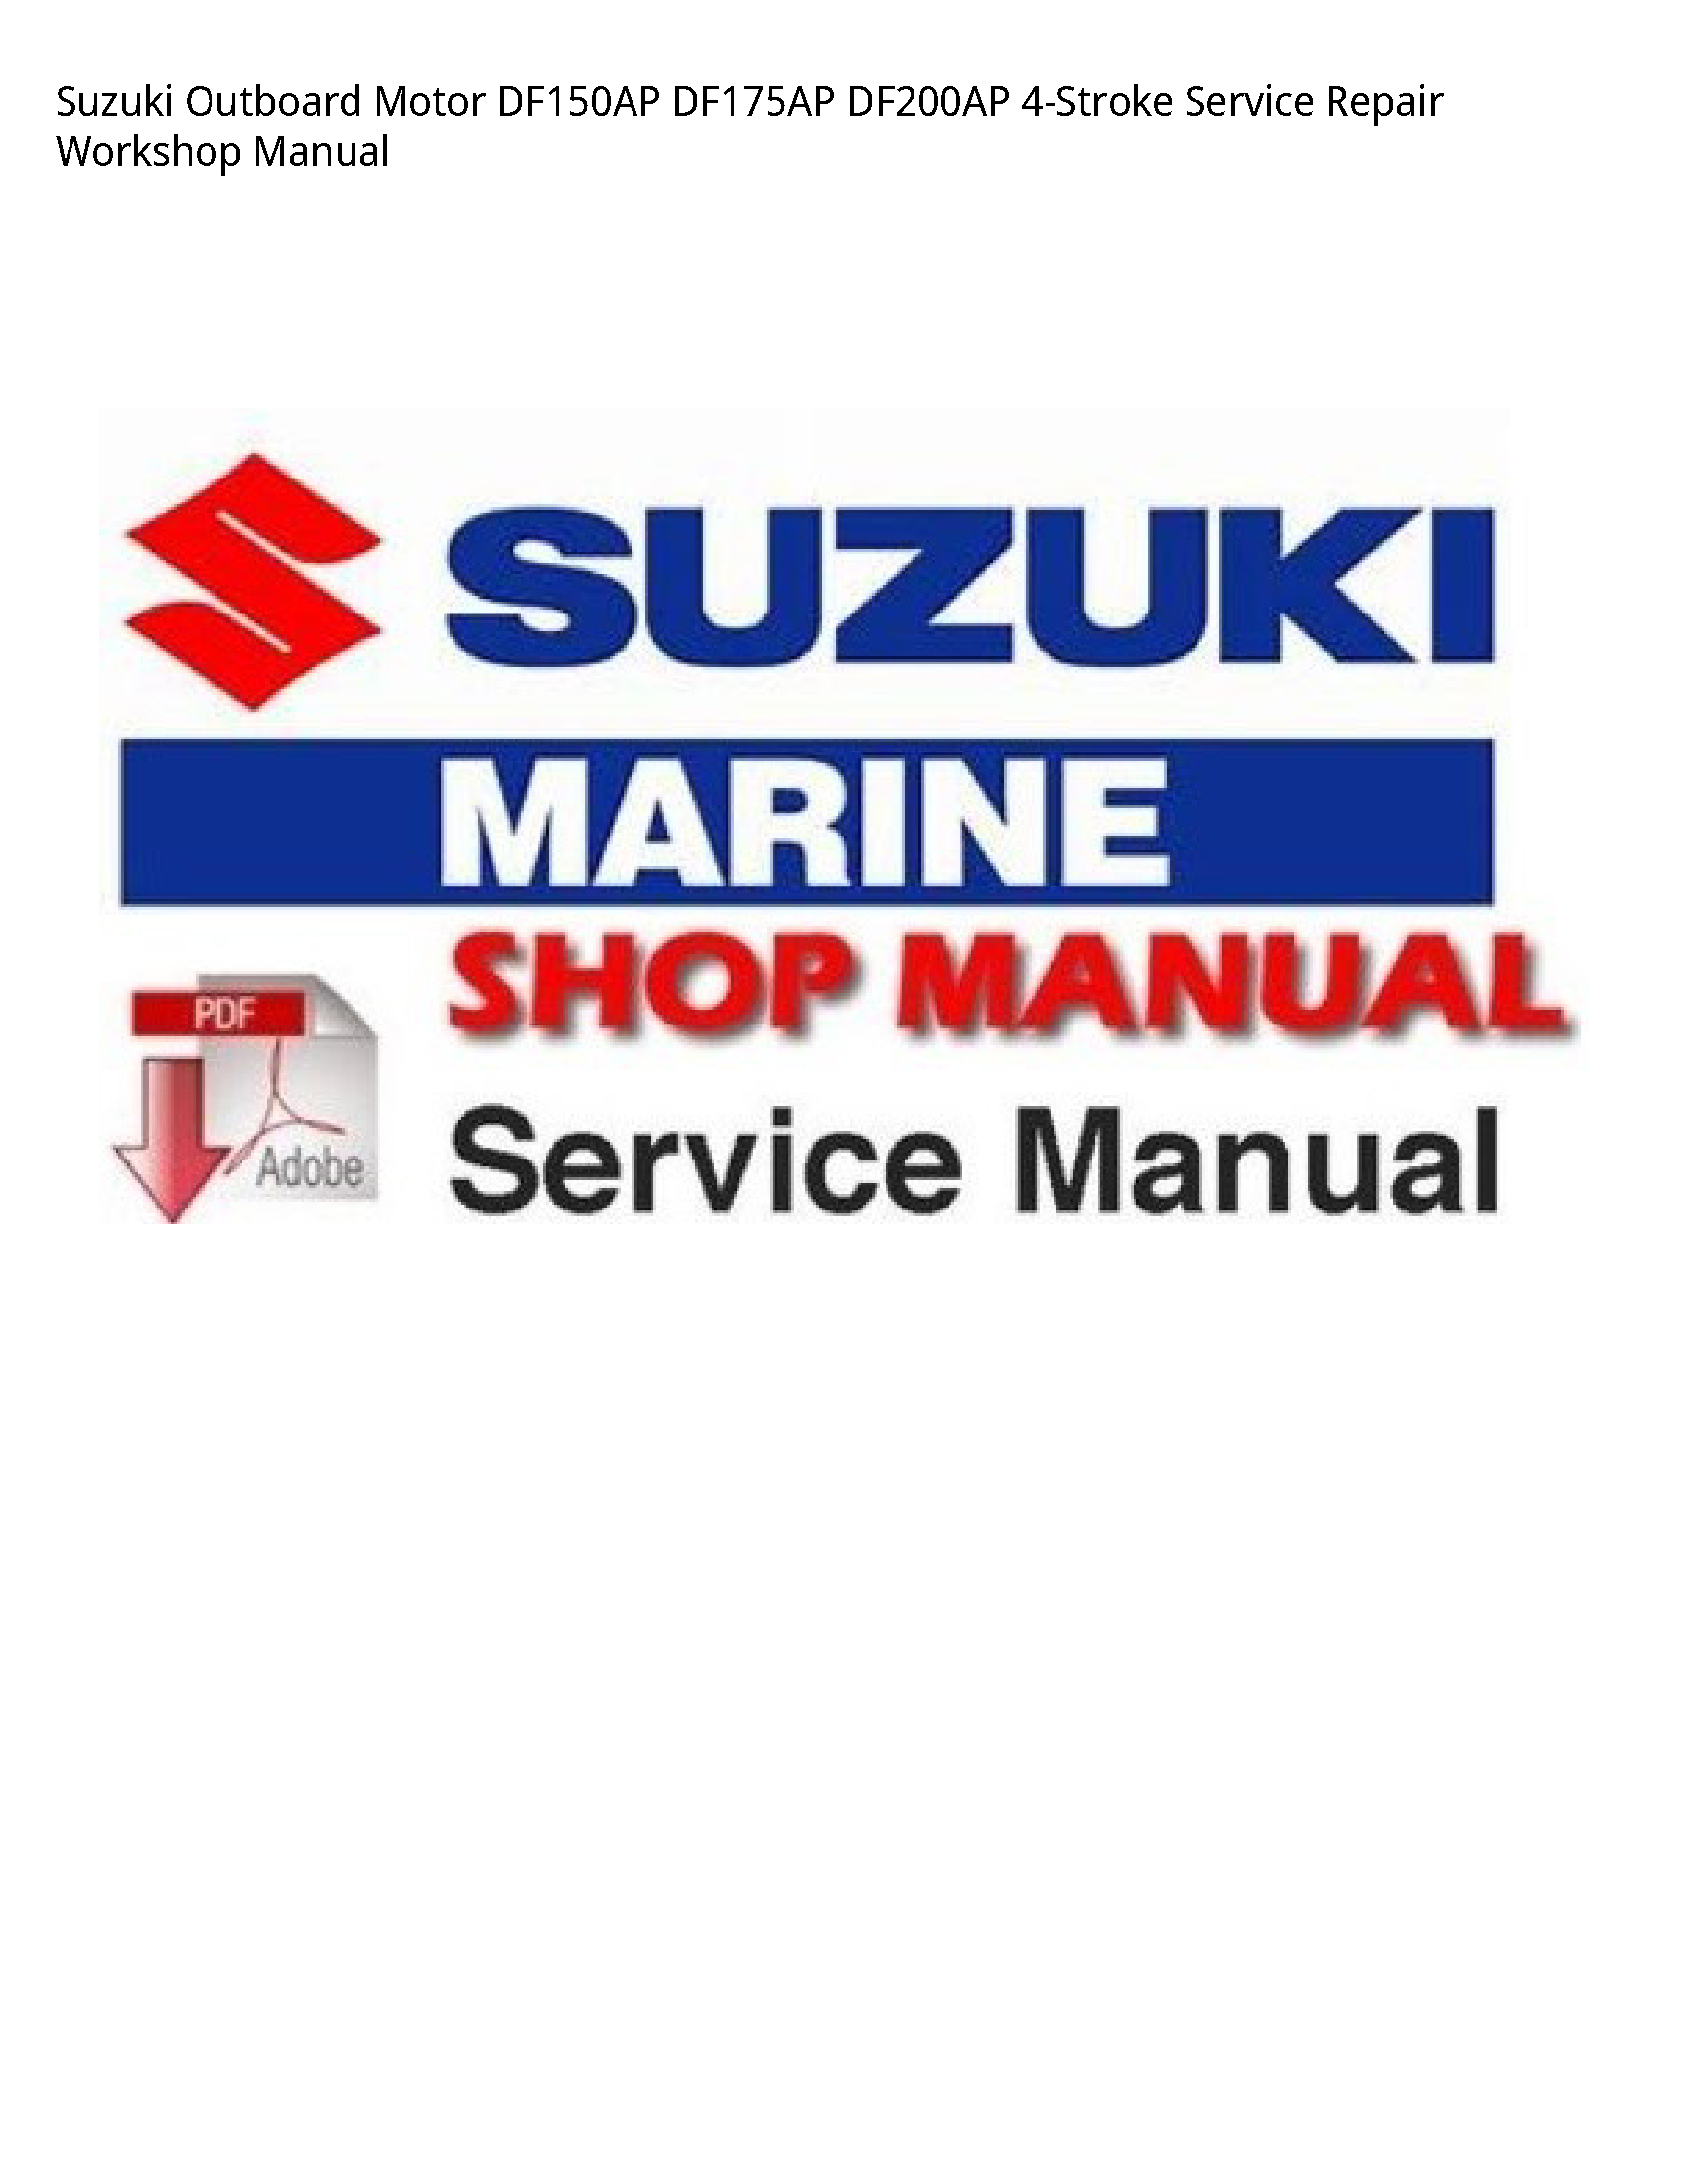 Suzuki DF150AP Outboard Motor manual